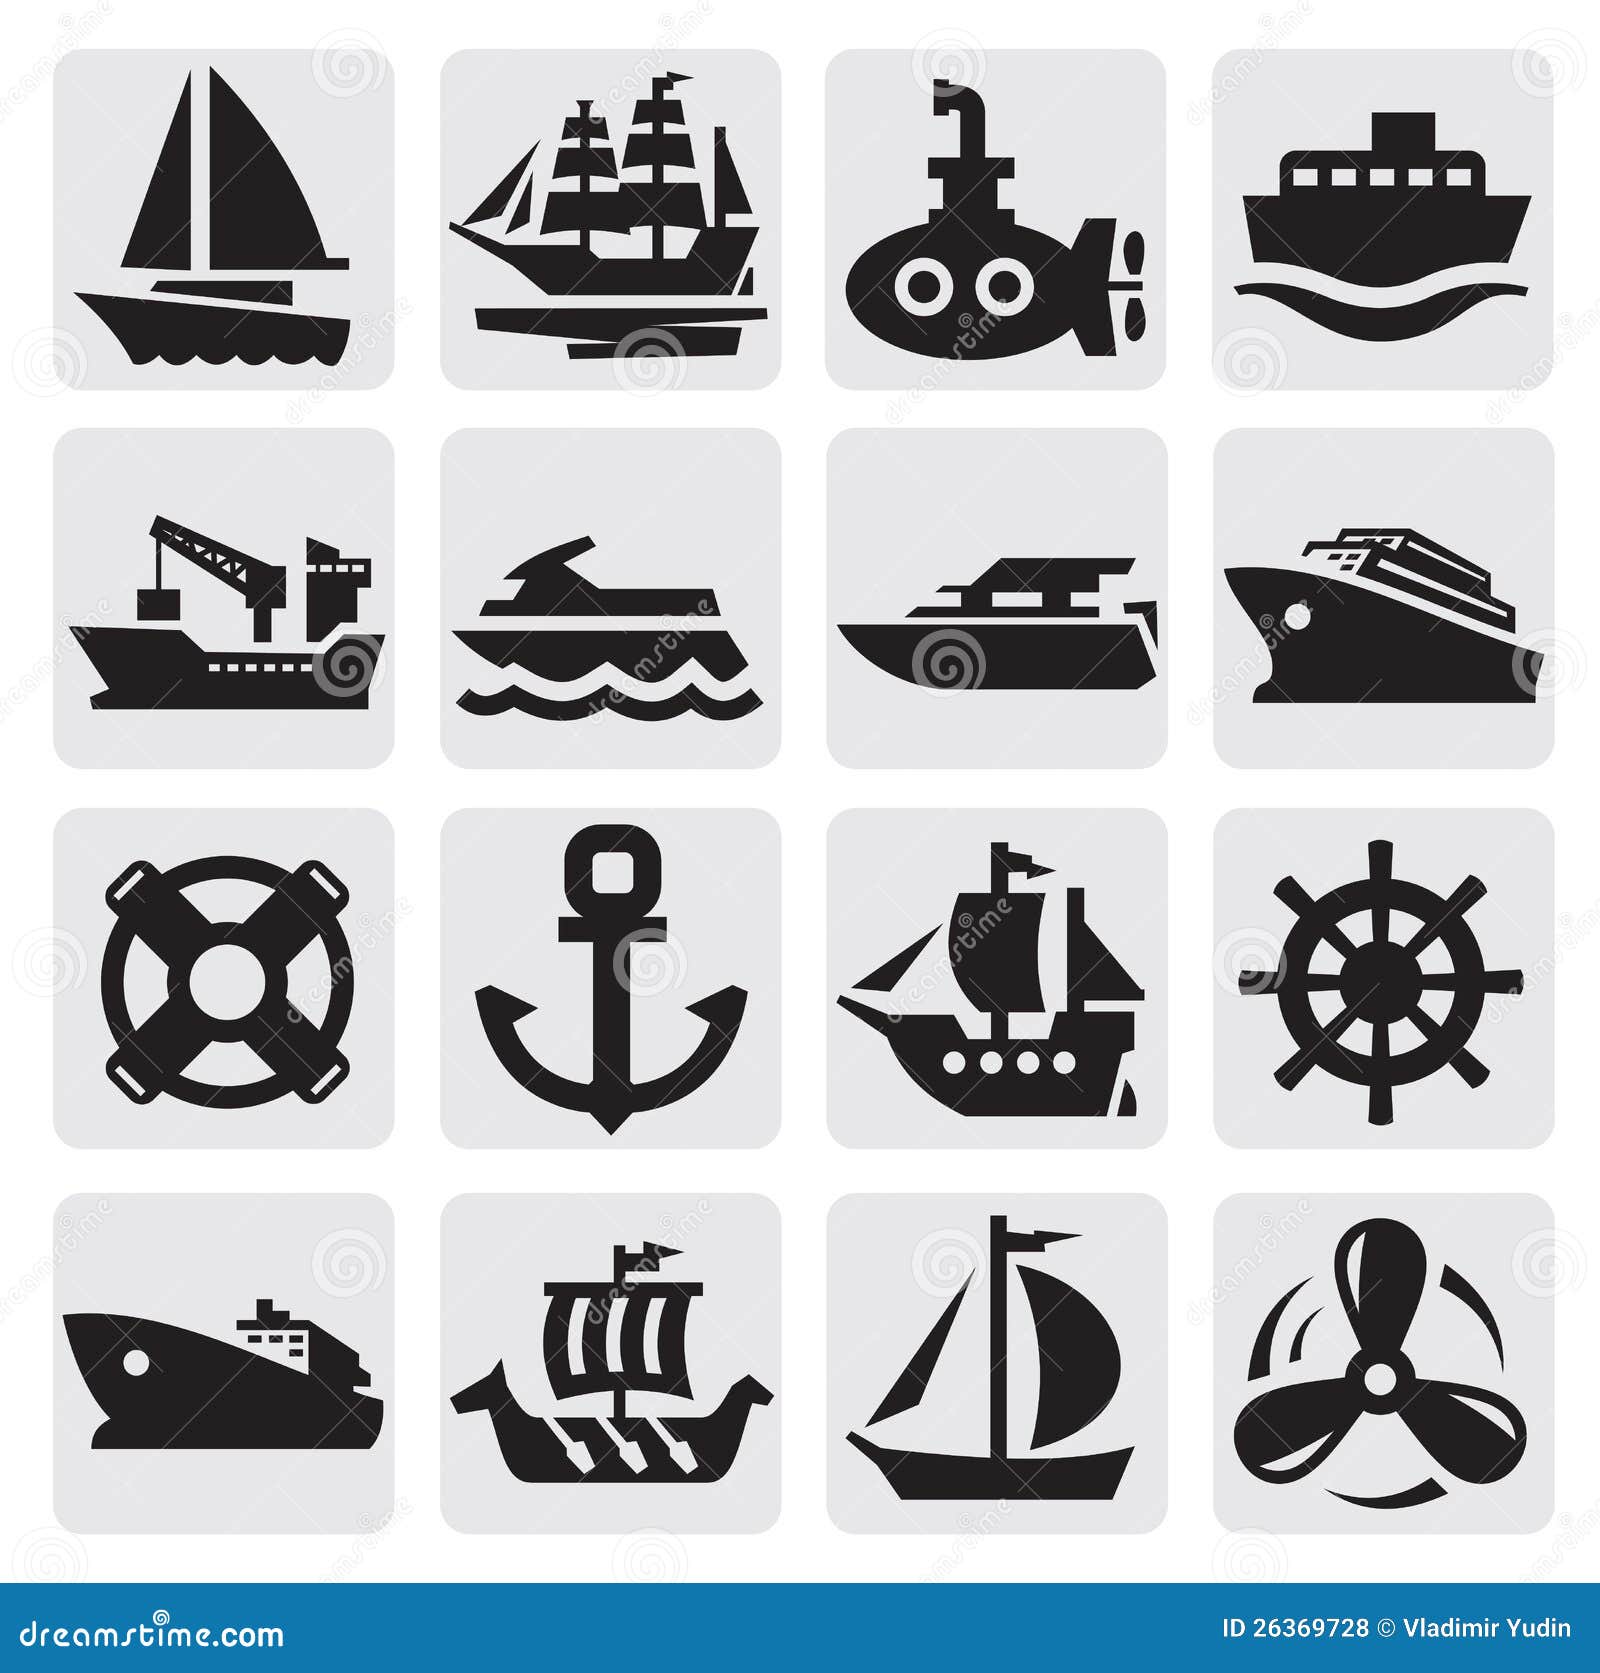 Royalty Free Stock Photos: Boat and ship icons set